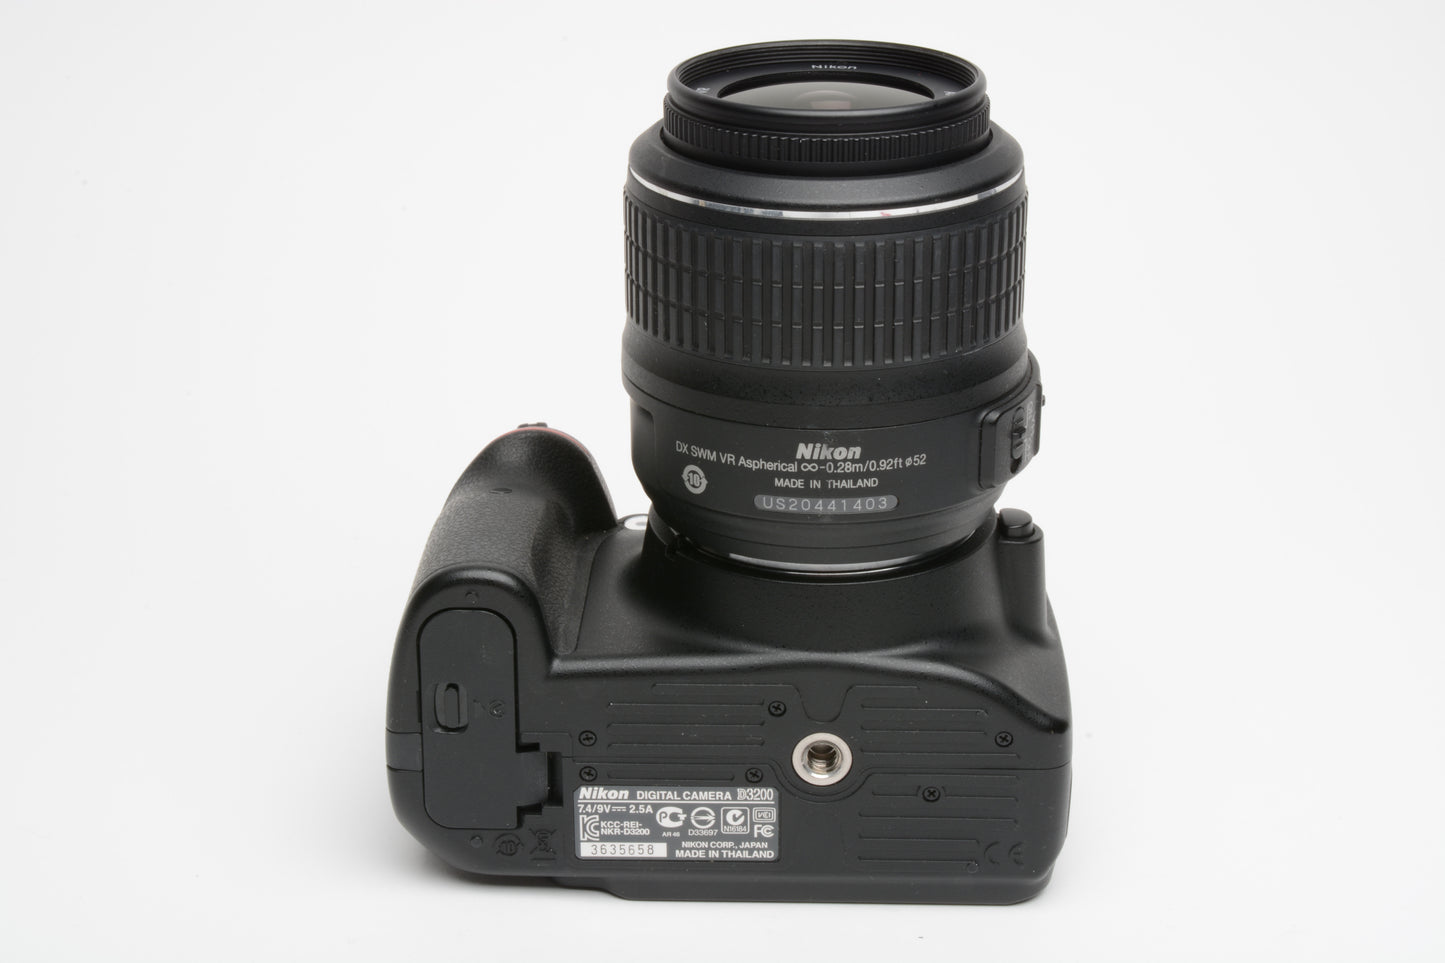 Nikon D3200 DSLR w/18-55mm f3.5-5.6G VR zoom lens, batt+charger+strap 3894 Acts